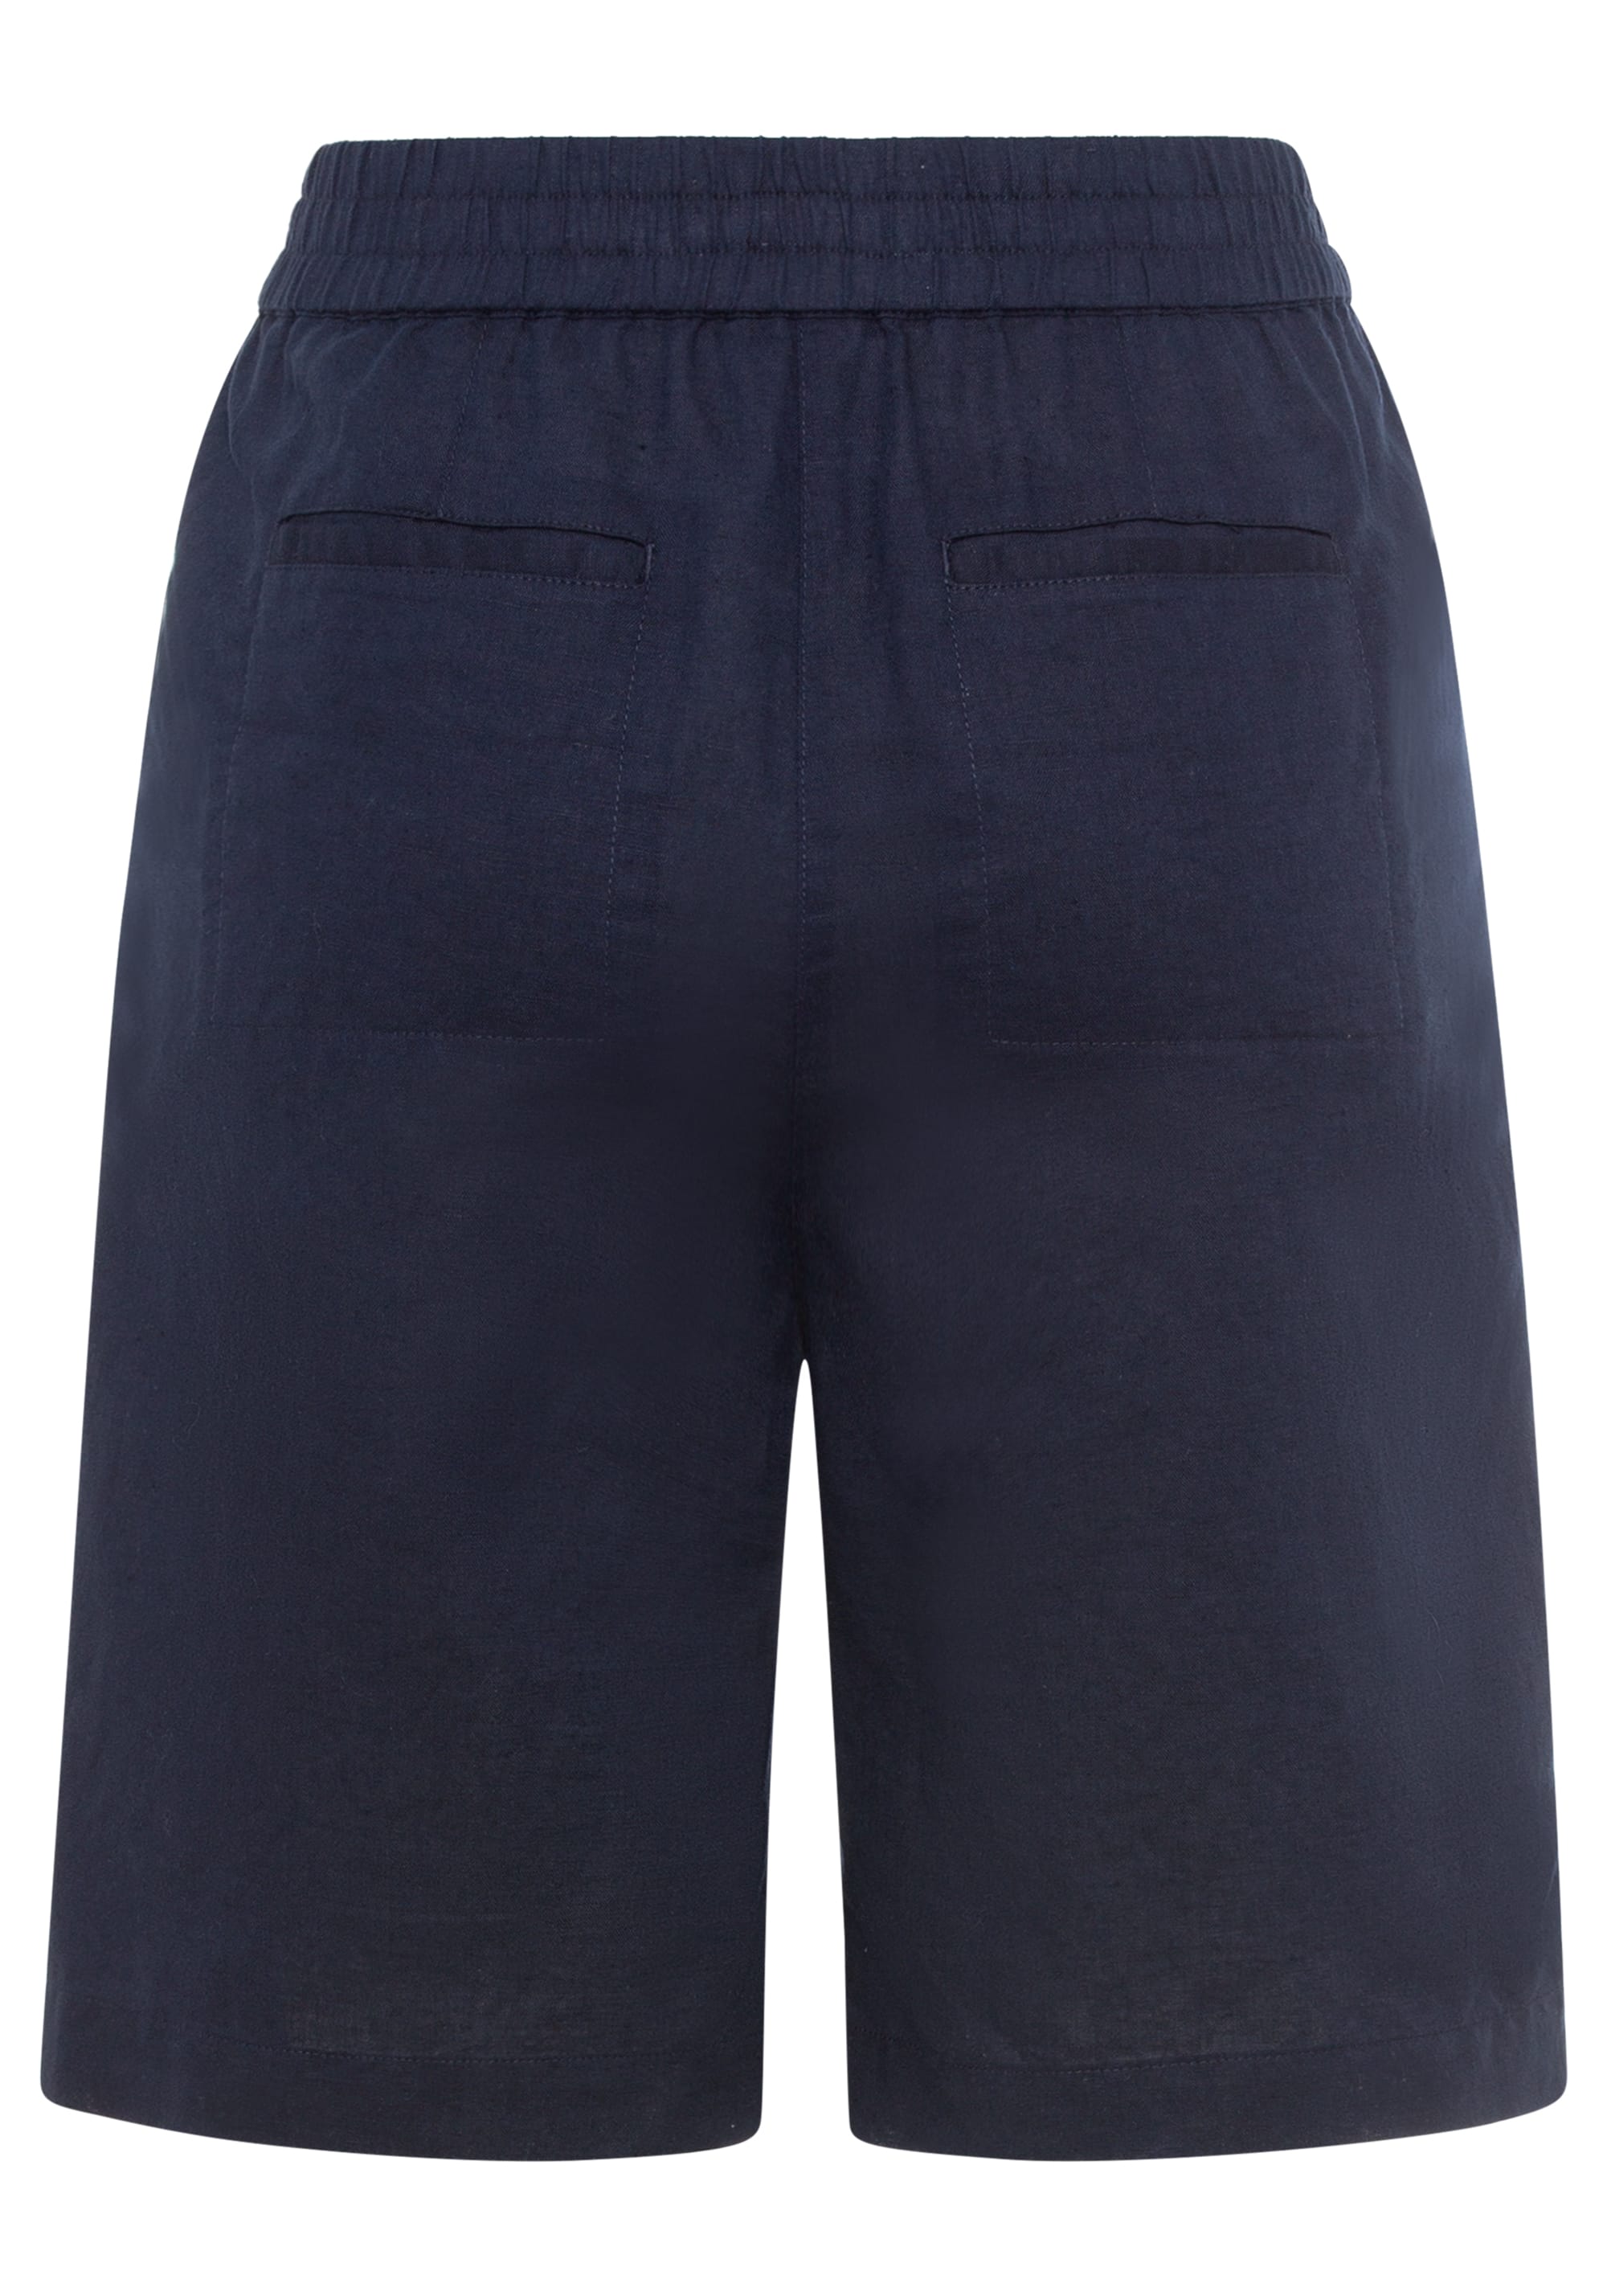 NIKE Men's Club Fleece Sweat Shorts (3XL, University Blue/Black